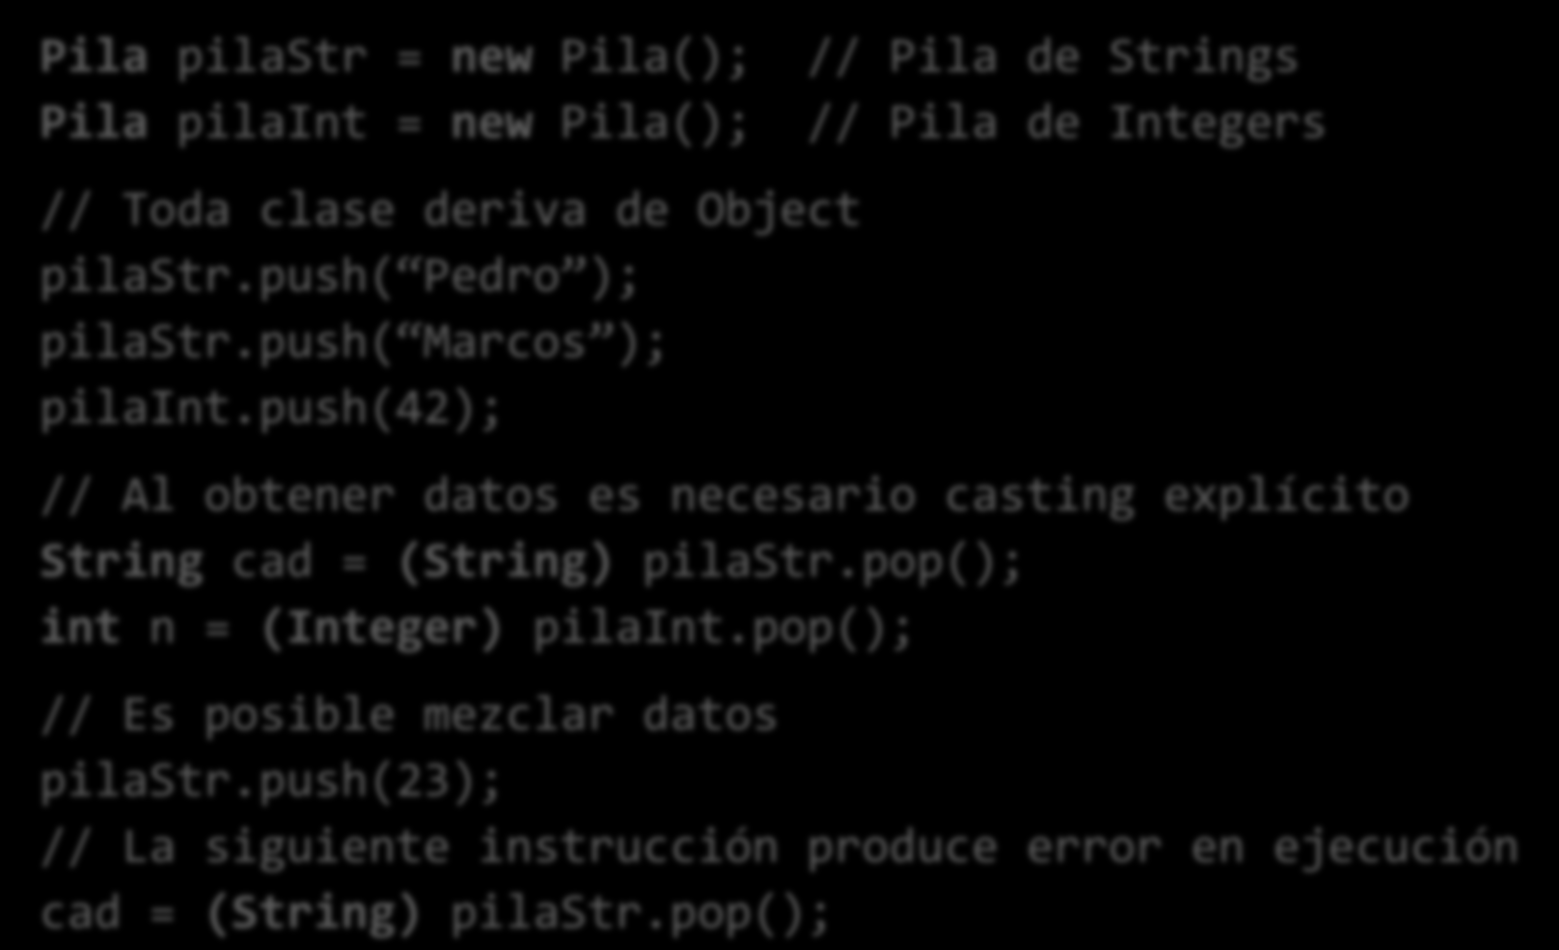 Generalización con Object (II) Pila pilastr = new Pila(); // Pila de Strings Pila pilaint = new Pila(); // Pila de Integers // Toda clase deriva de Object pilastr.push( Pedro ); pilastr.